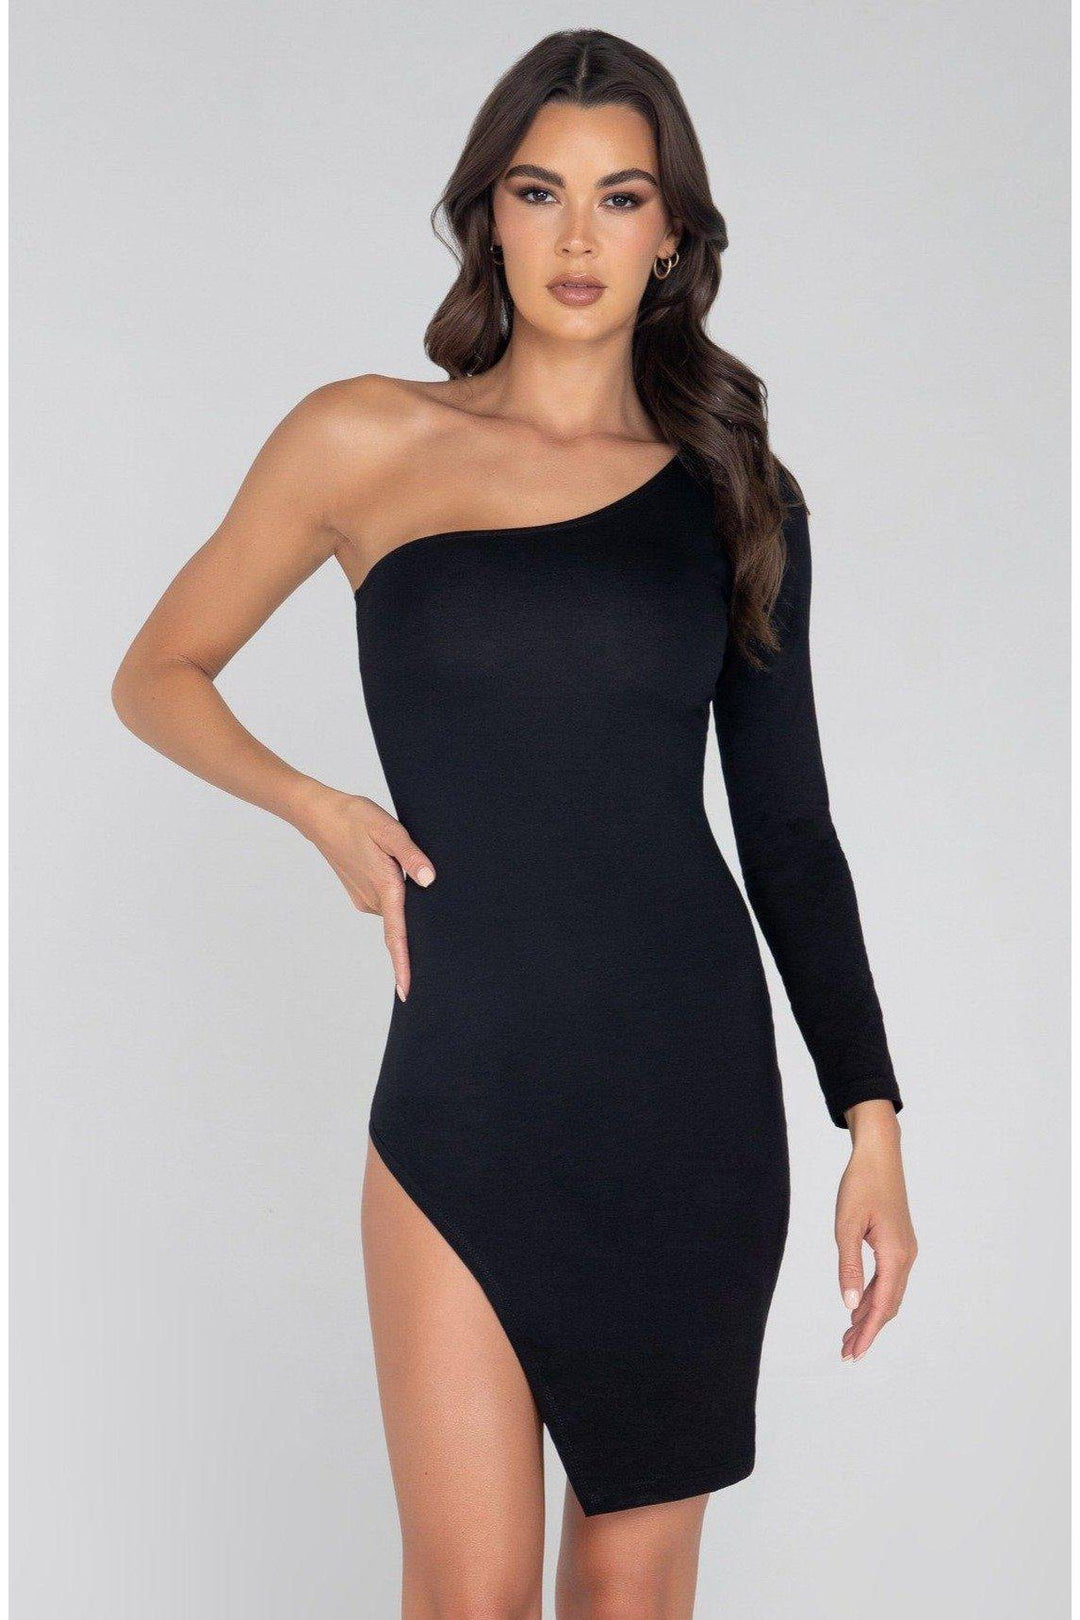 SS-Single Shoulder Split Bodycon Dress-Clothing-Roma Brand-Black-XL-SEXYSHOES.COM